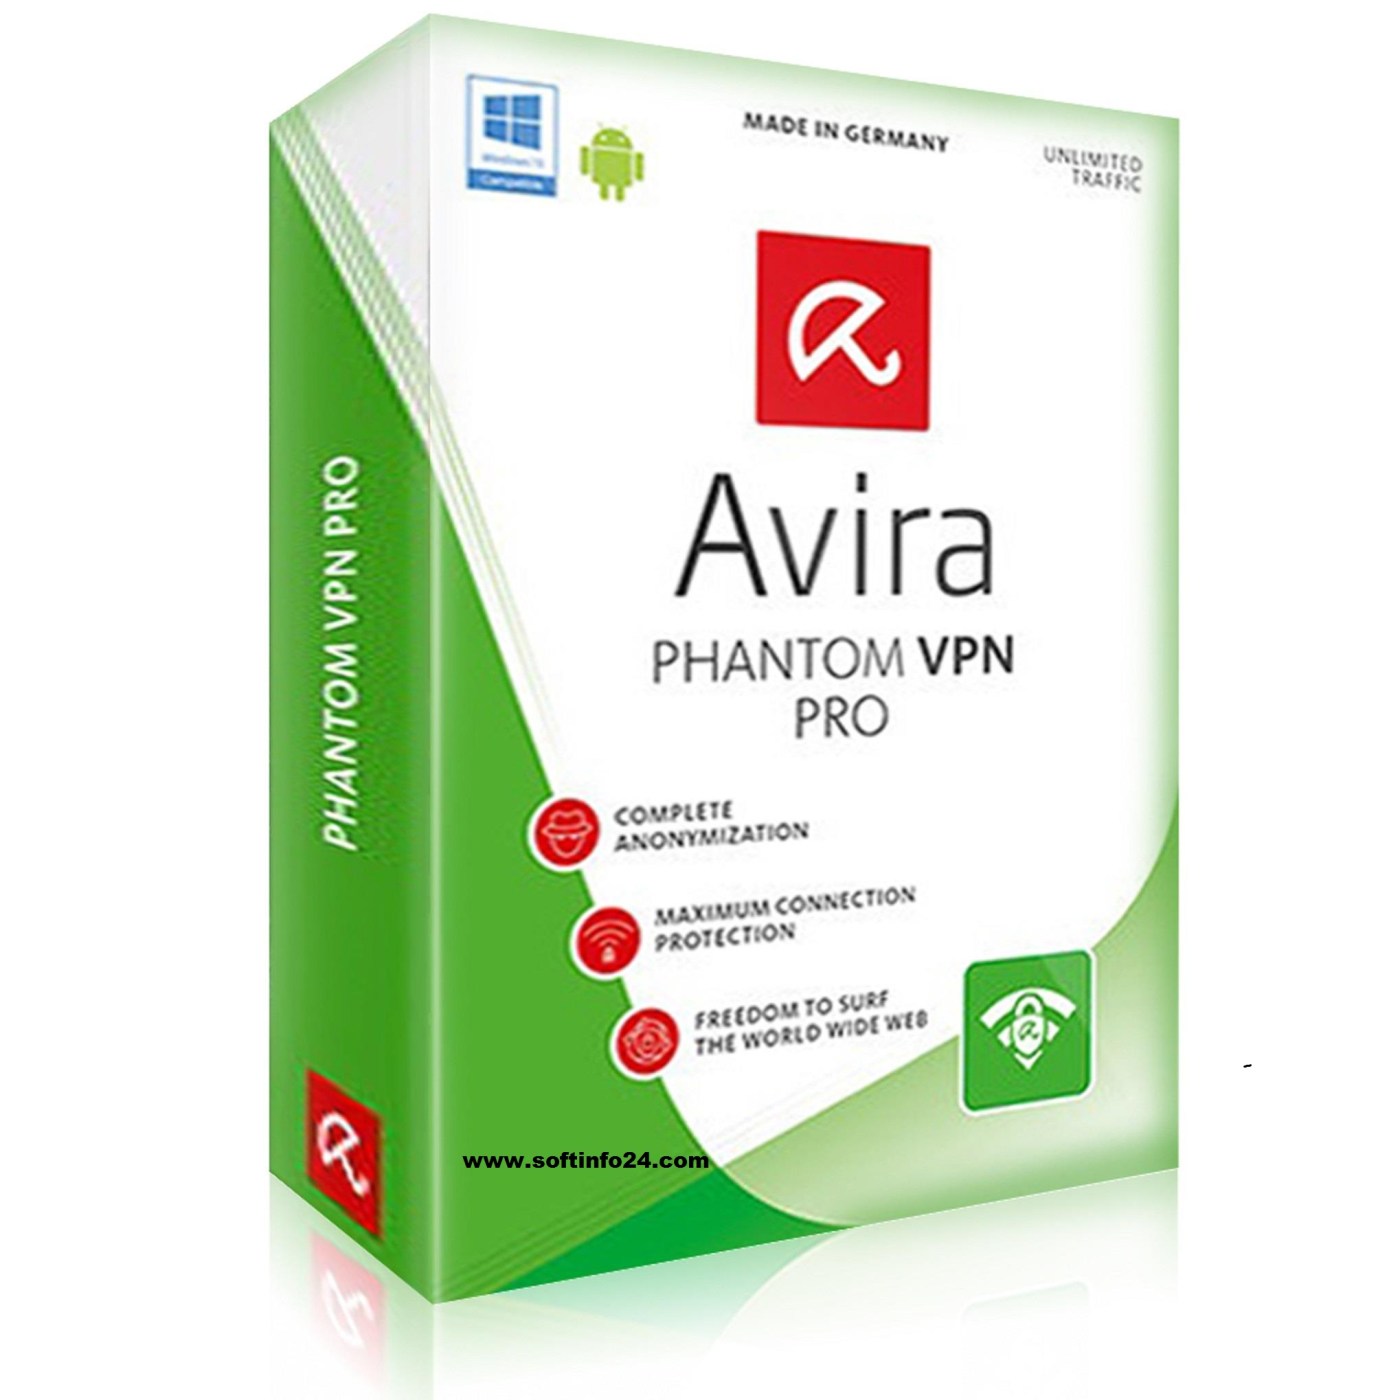 Avira Phantom VPN Pro 2.16 With Crack 2019 Latest Version